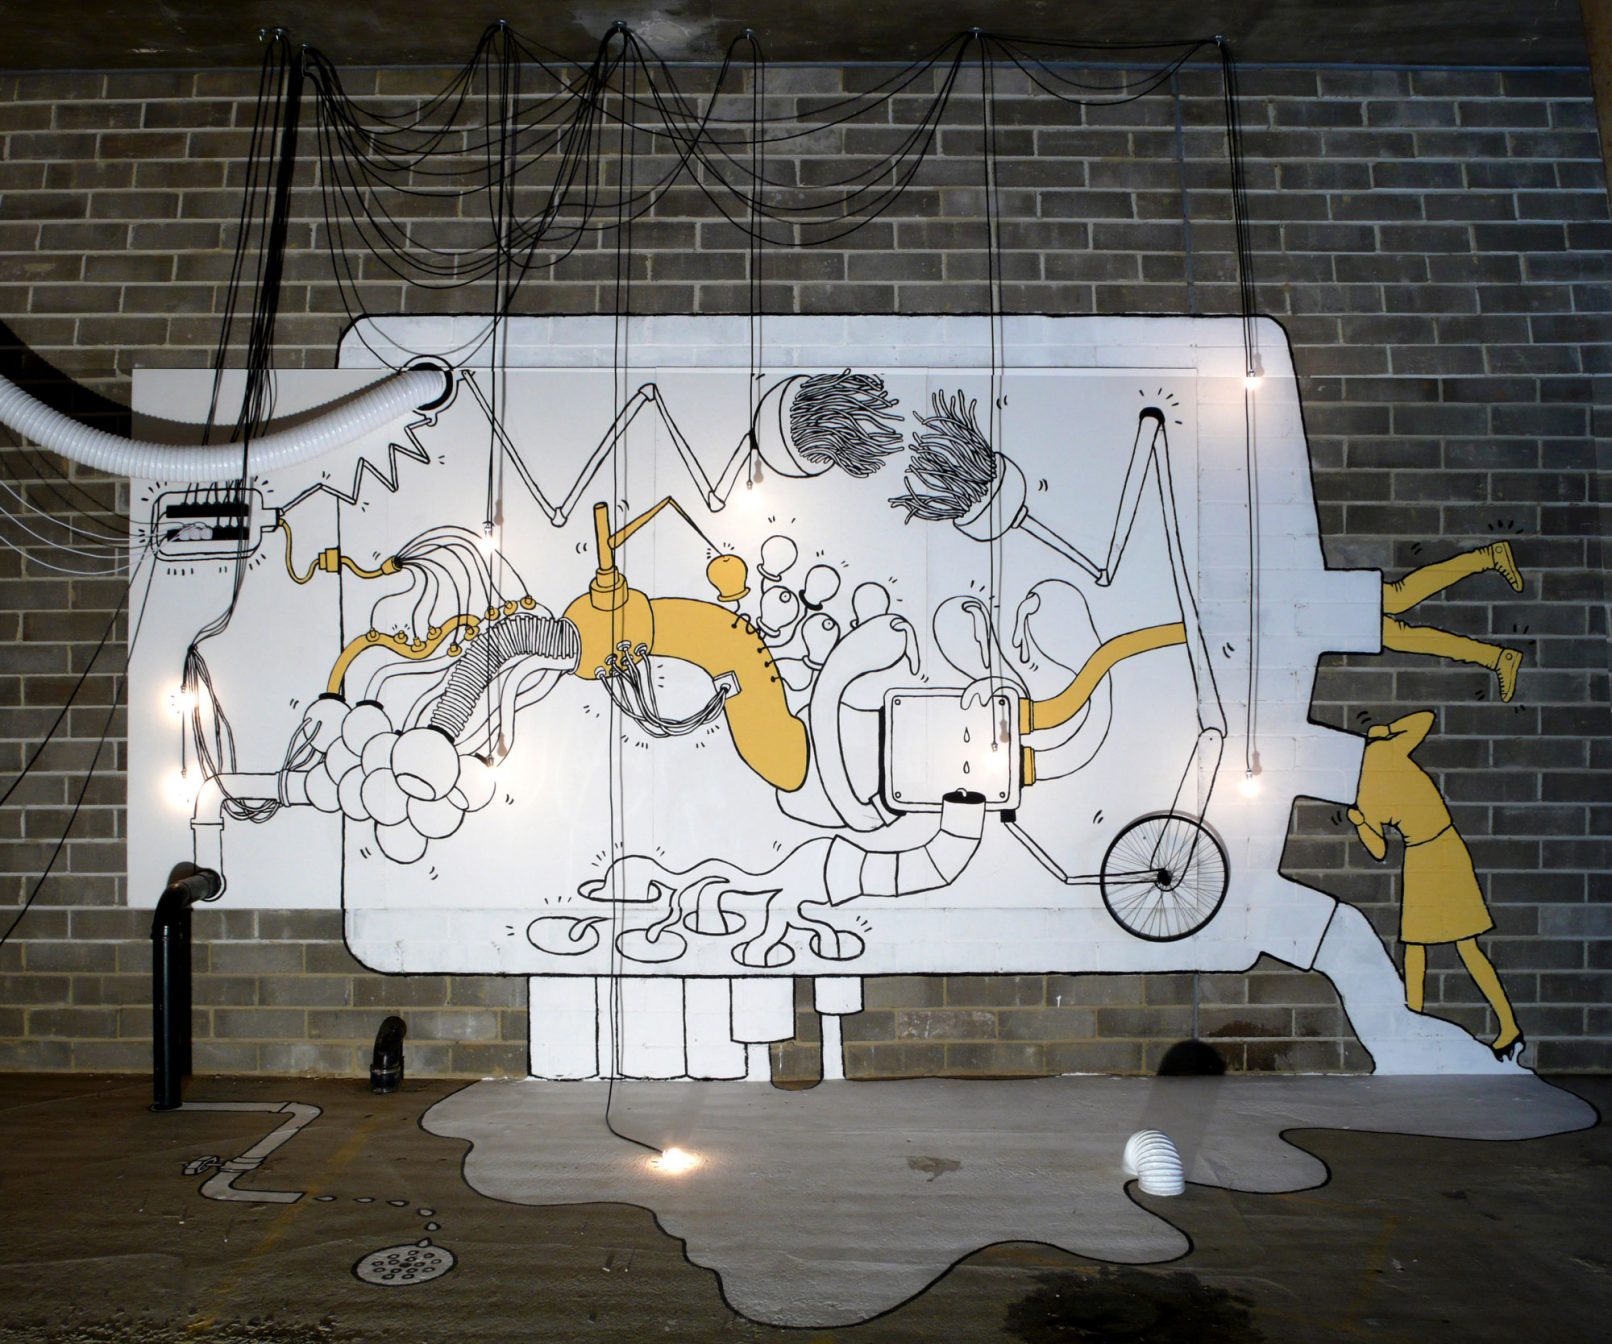 Design Week Illustrate - 13.3 m x 5.7 m installation - people's eating machine